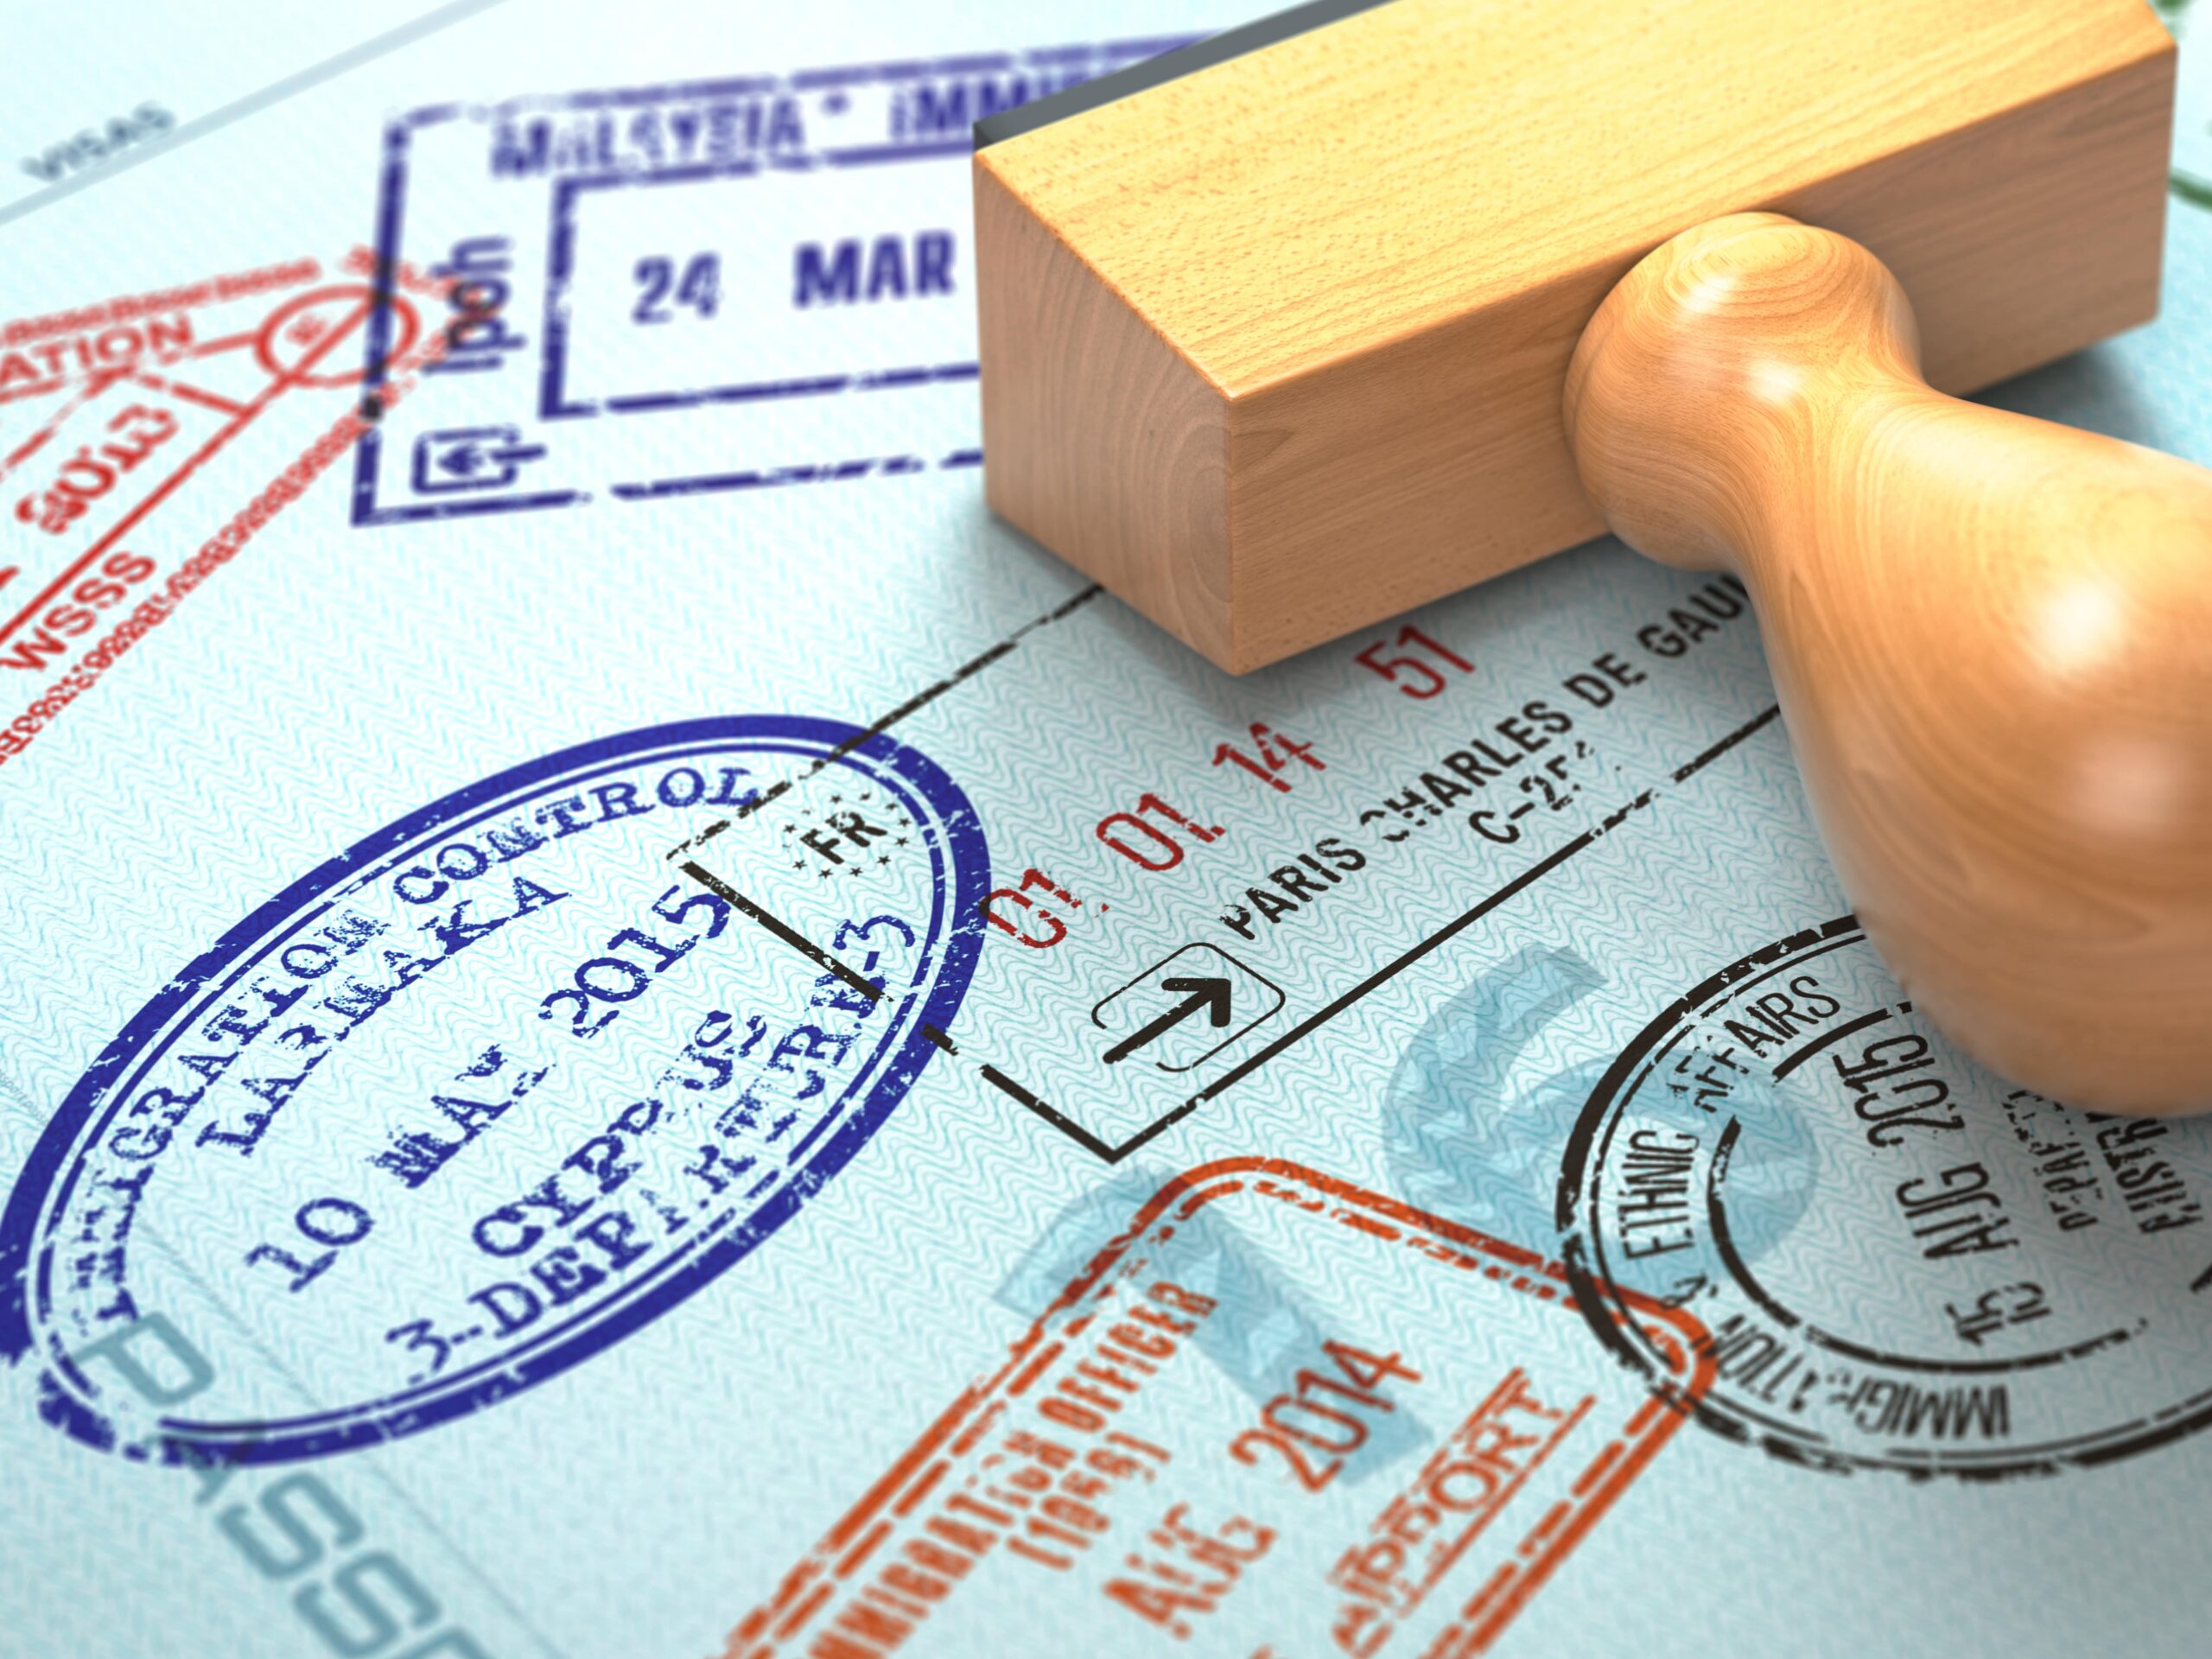 passport-with-visa-stamps-travel-or-turism-concep-2021-08-26-16-57-05-utc-min